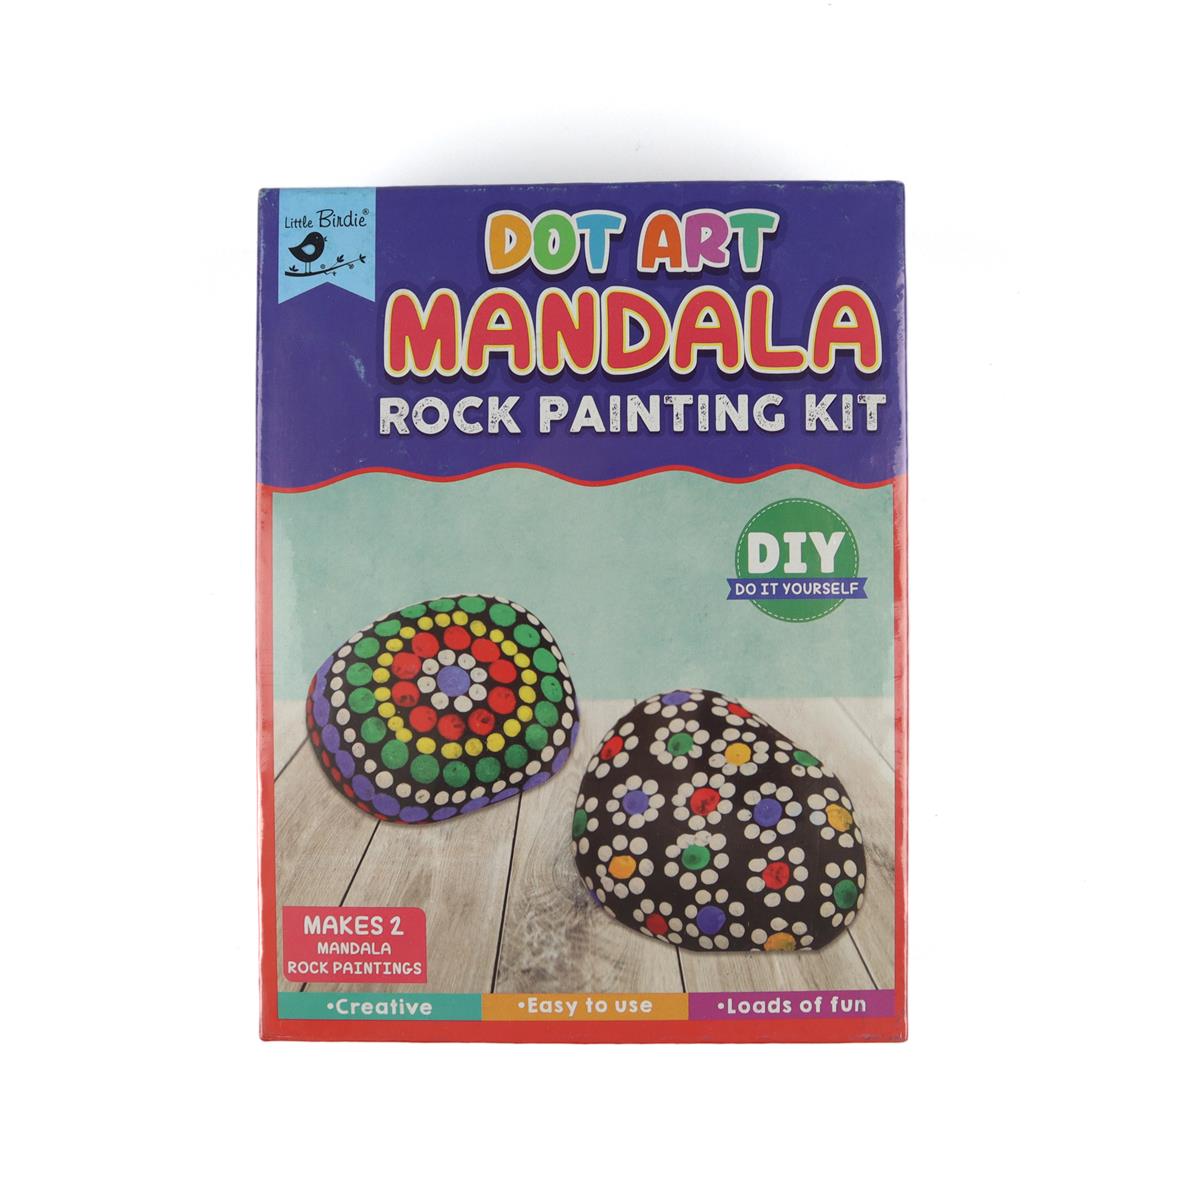 Little Birdie. DIY Dot Art Mandala Rock Painting Kit.